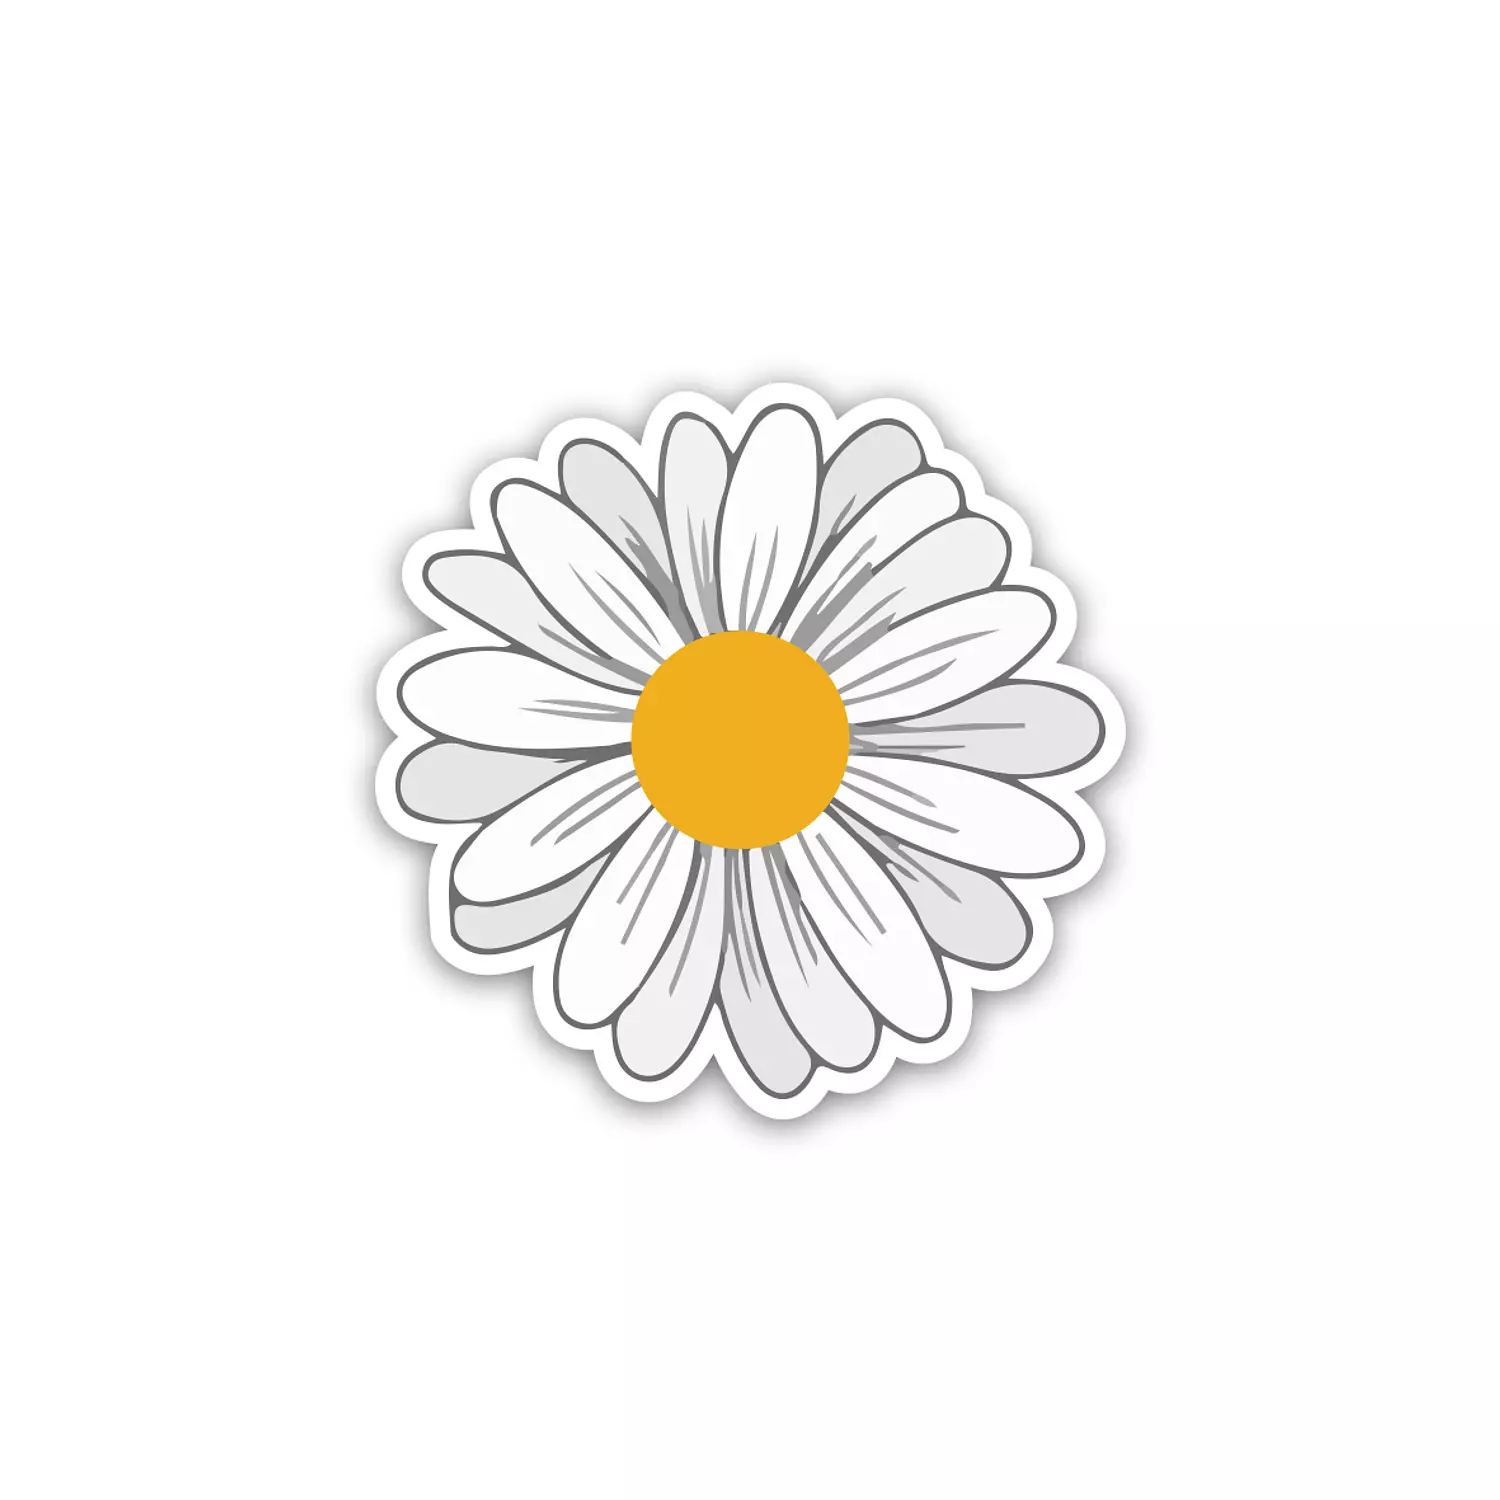 Chamomile - White Flower - Daisy  hover image